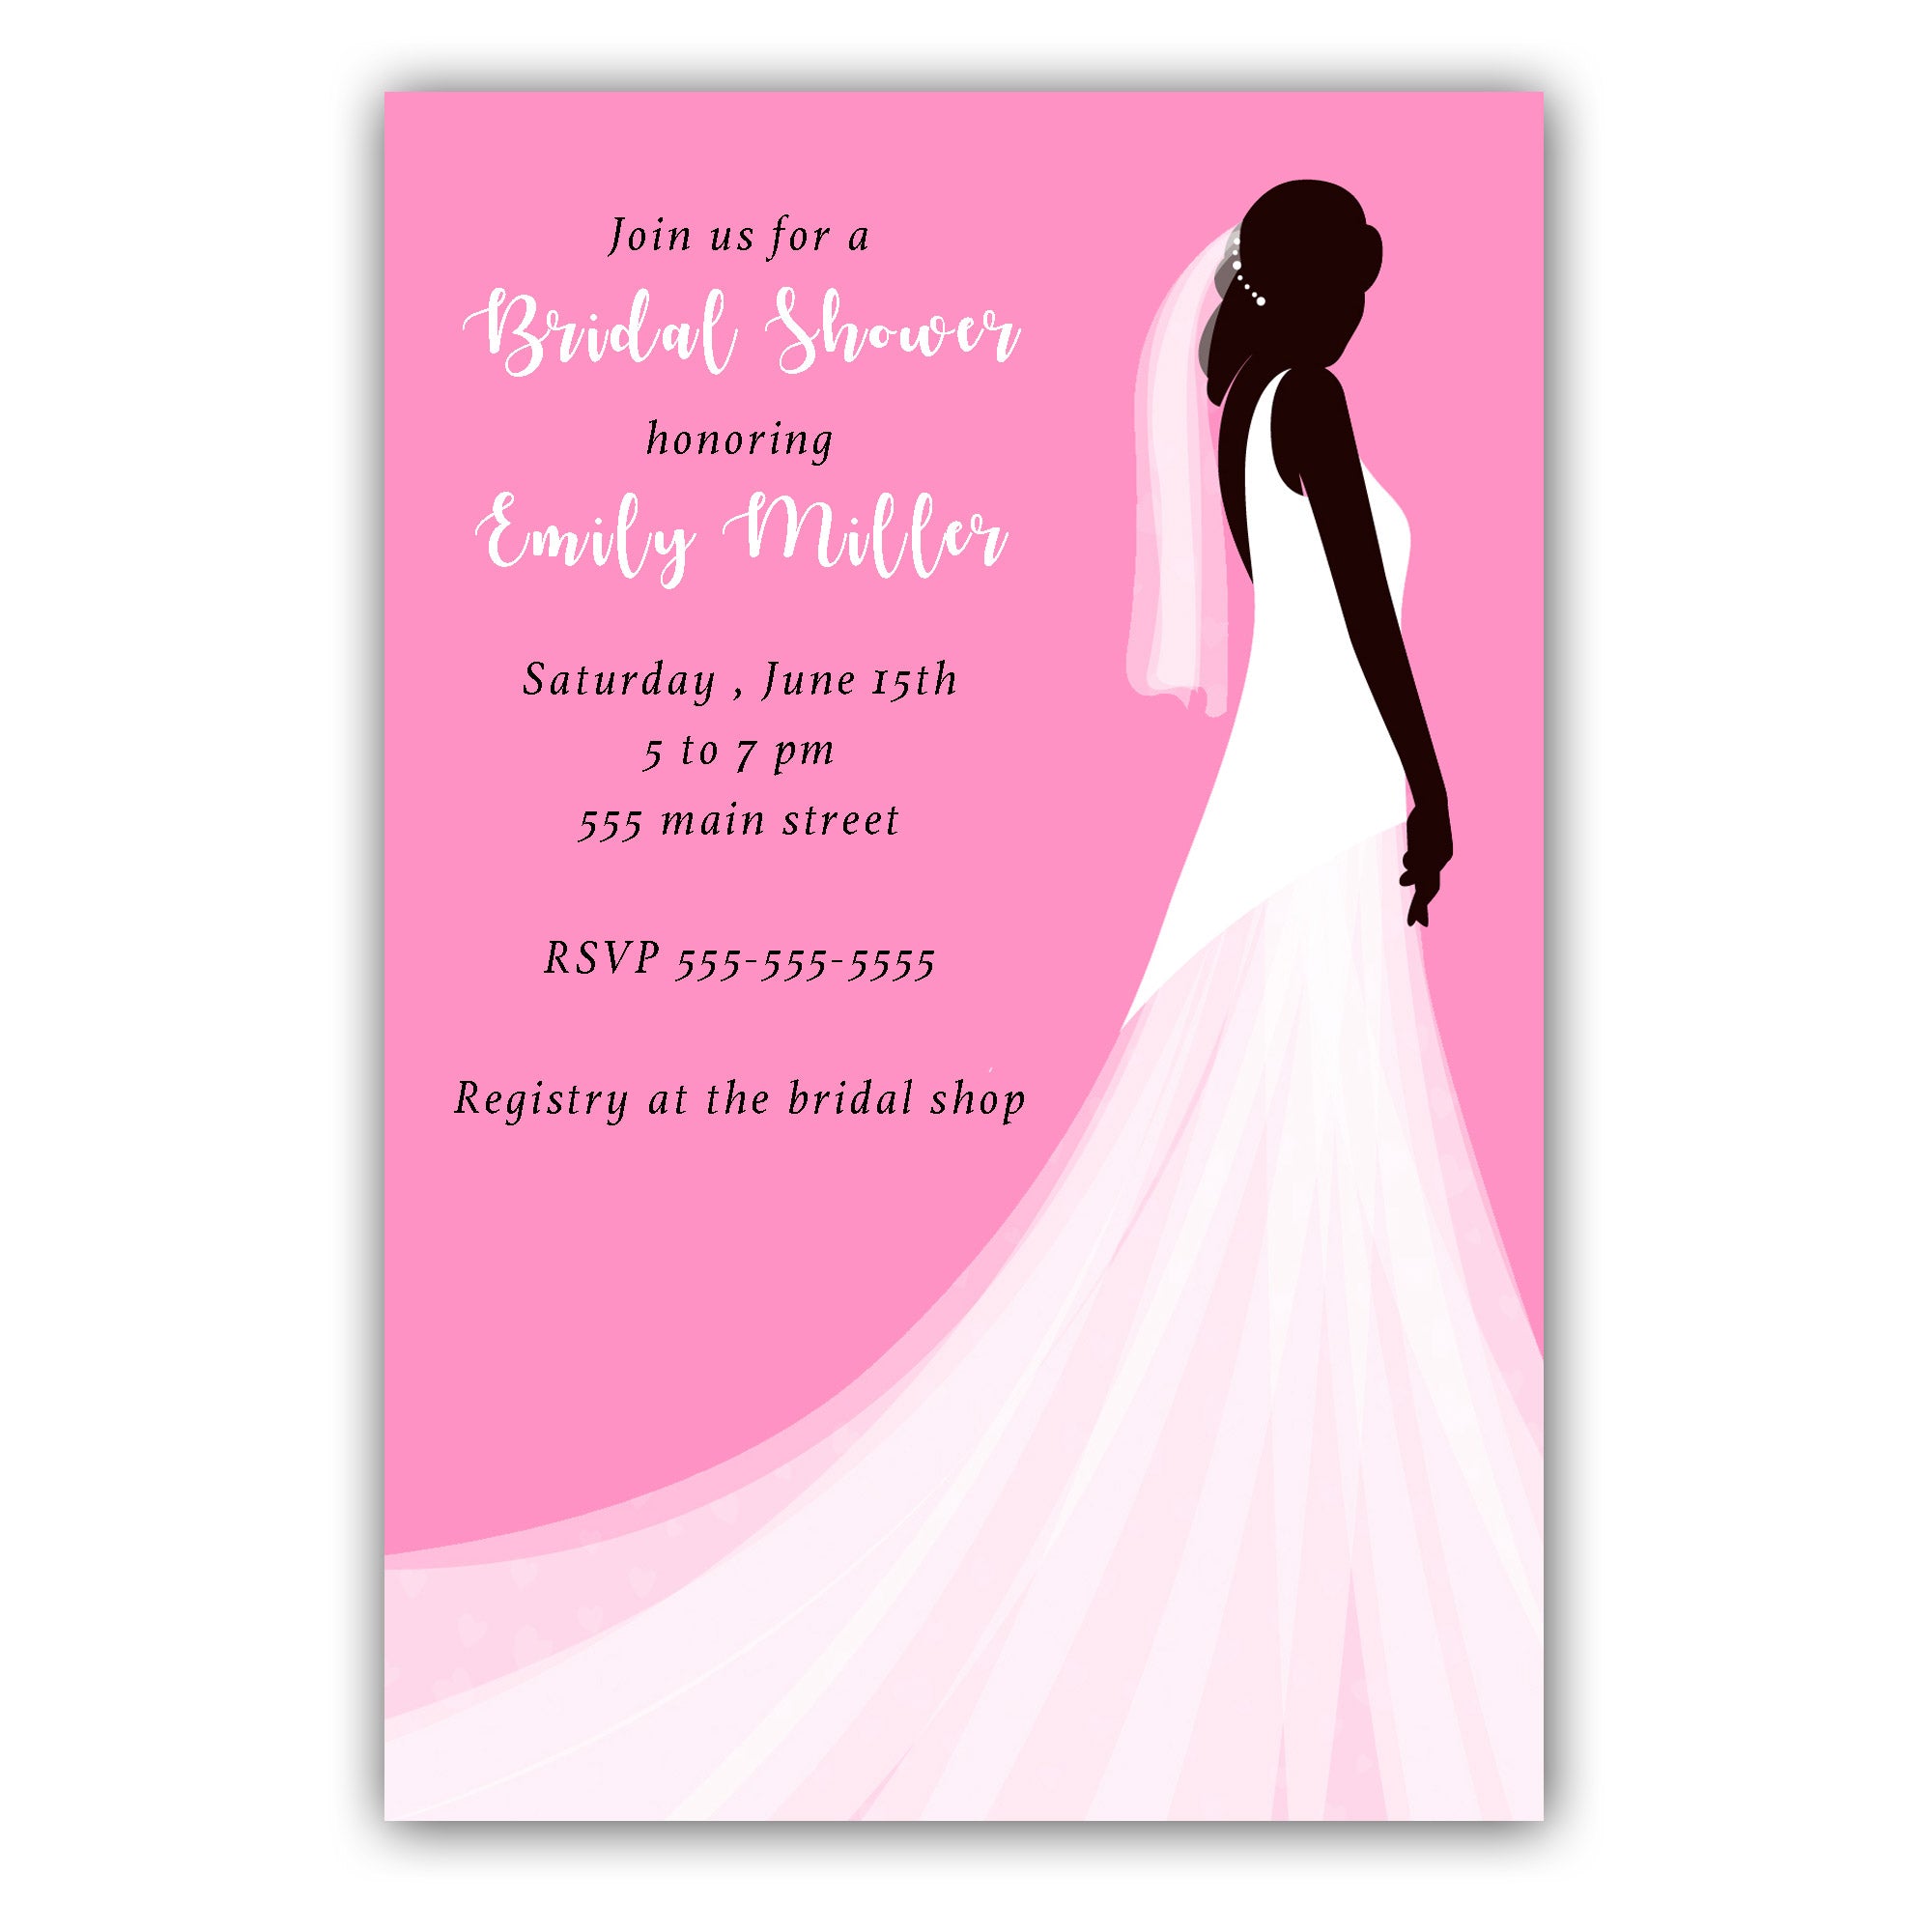 30 Dress invitations pink white wedding bridal shower with envelopes